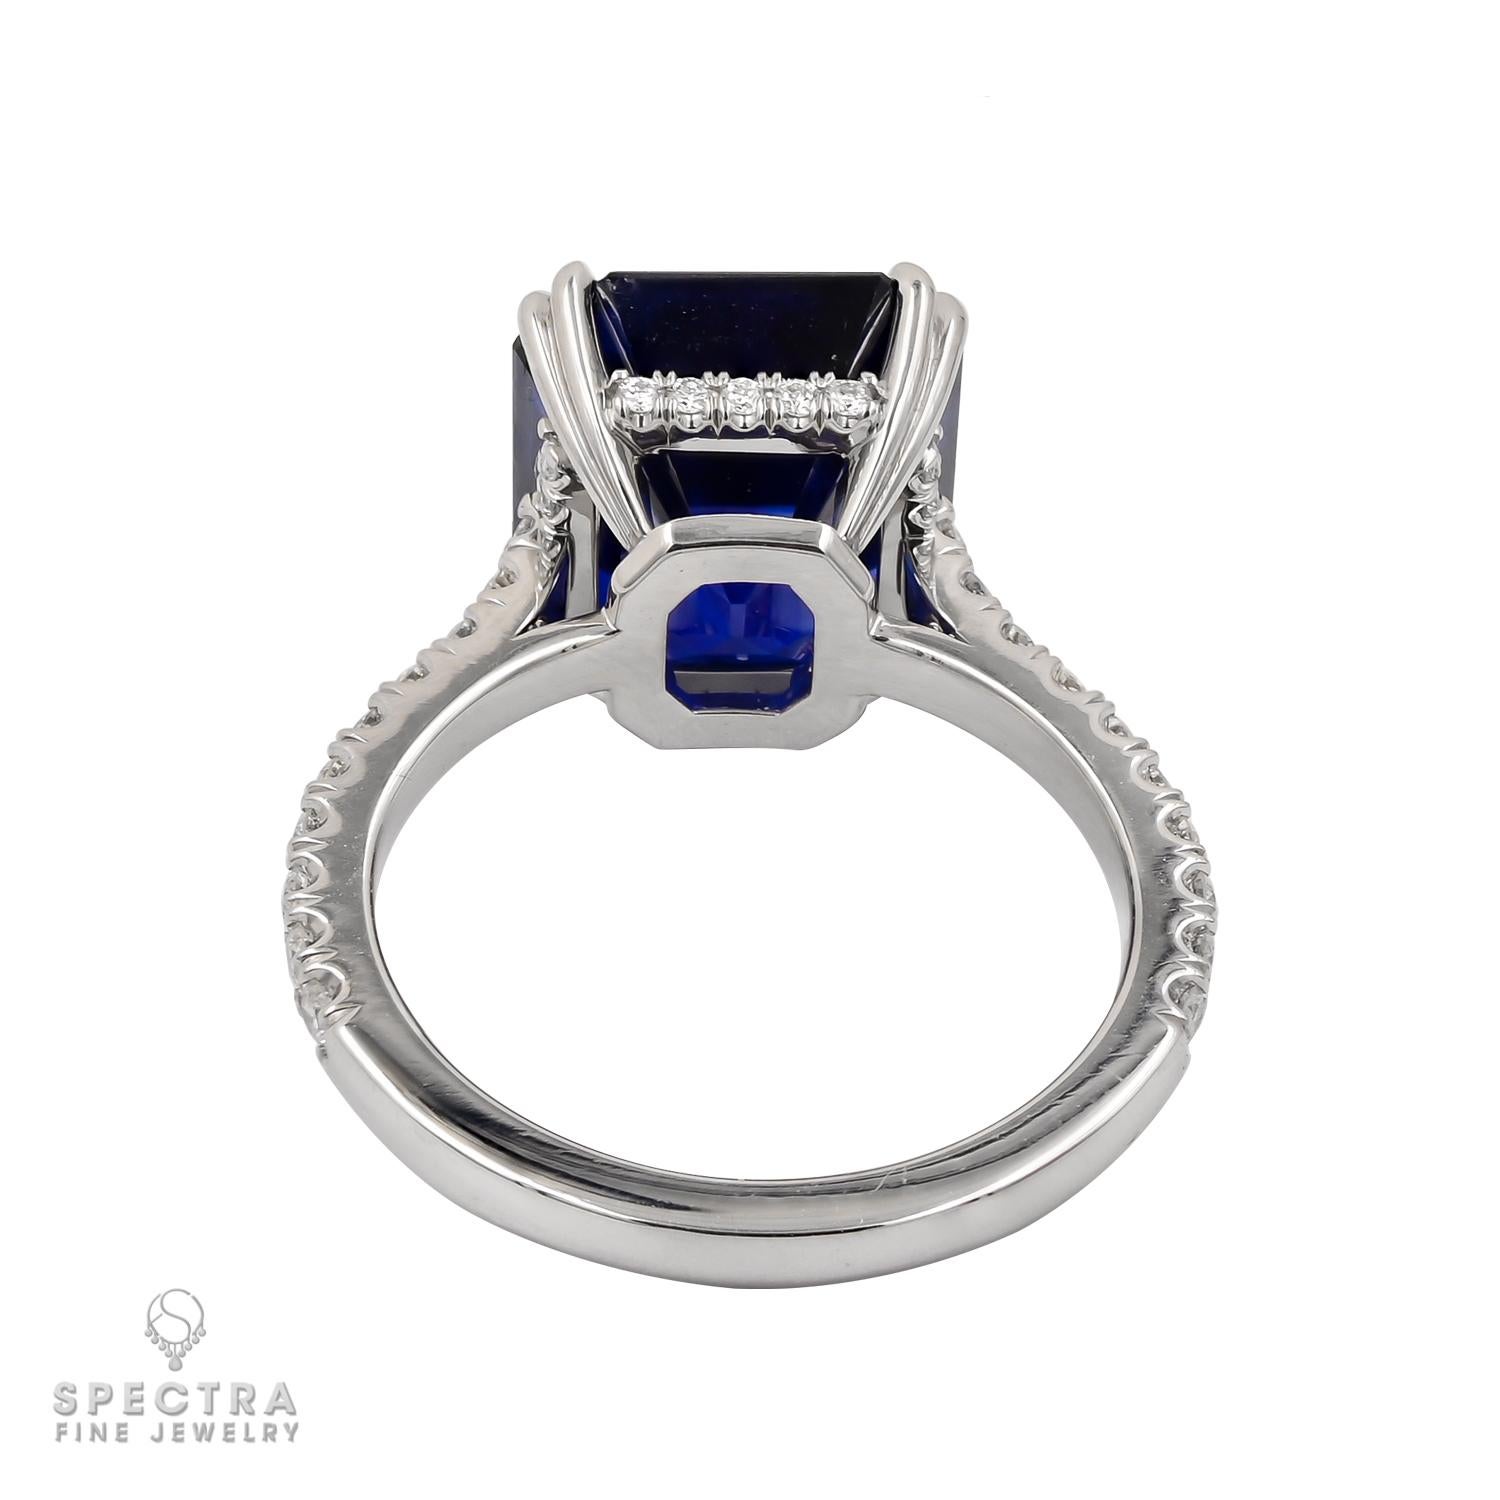 Contemporary Spectra Fine Jewelry AGL Certified 8.06 Carat Ceylon Sapphire Diamond Ring For Sale